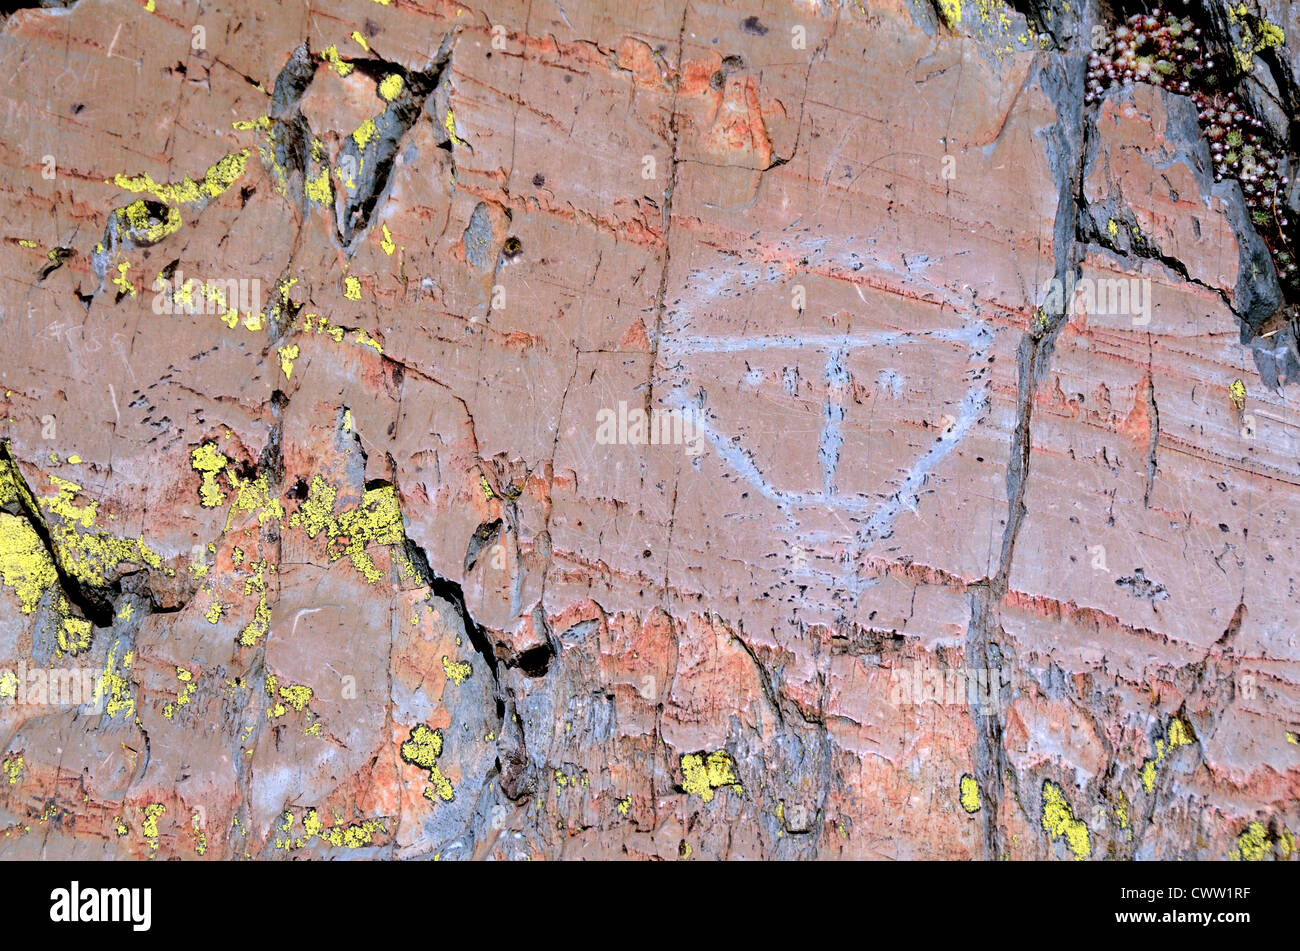 Bronzezeit Felsgravuren oder Petroglyphen der sogenannten "Christus"-Figur im Vallée des Merveilles, Nationalpark Mercantour, Alpes-Maritimes Frankreich Stockfoto